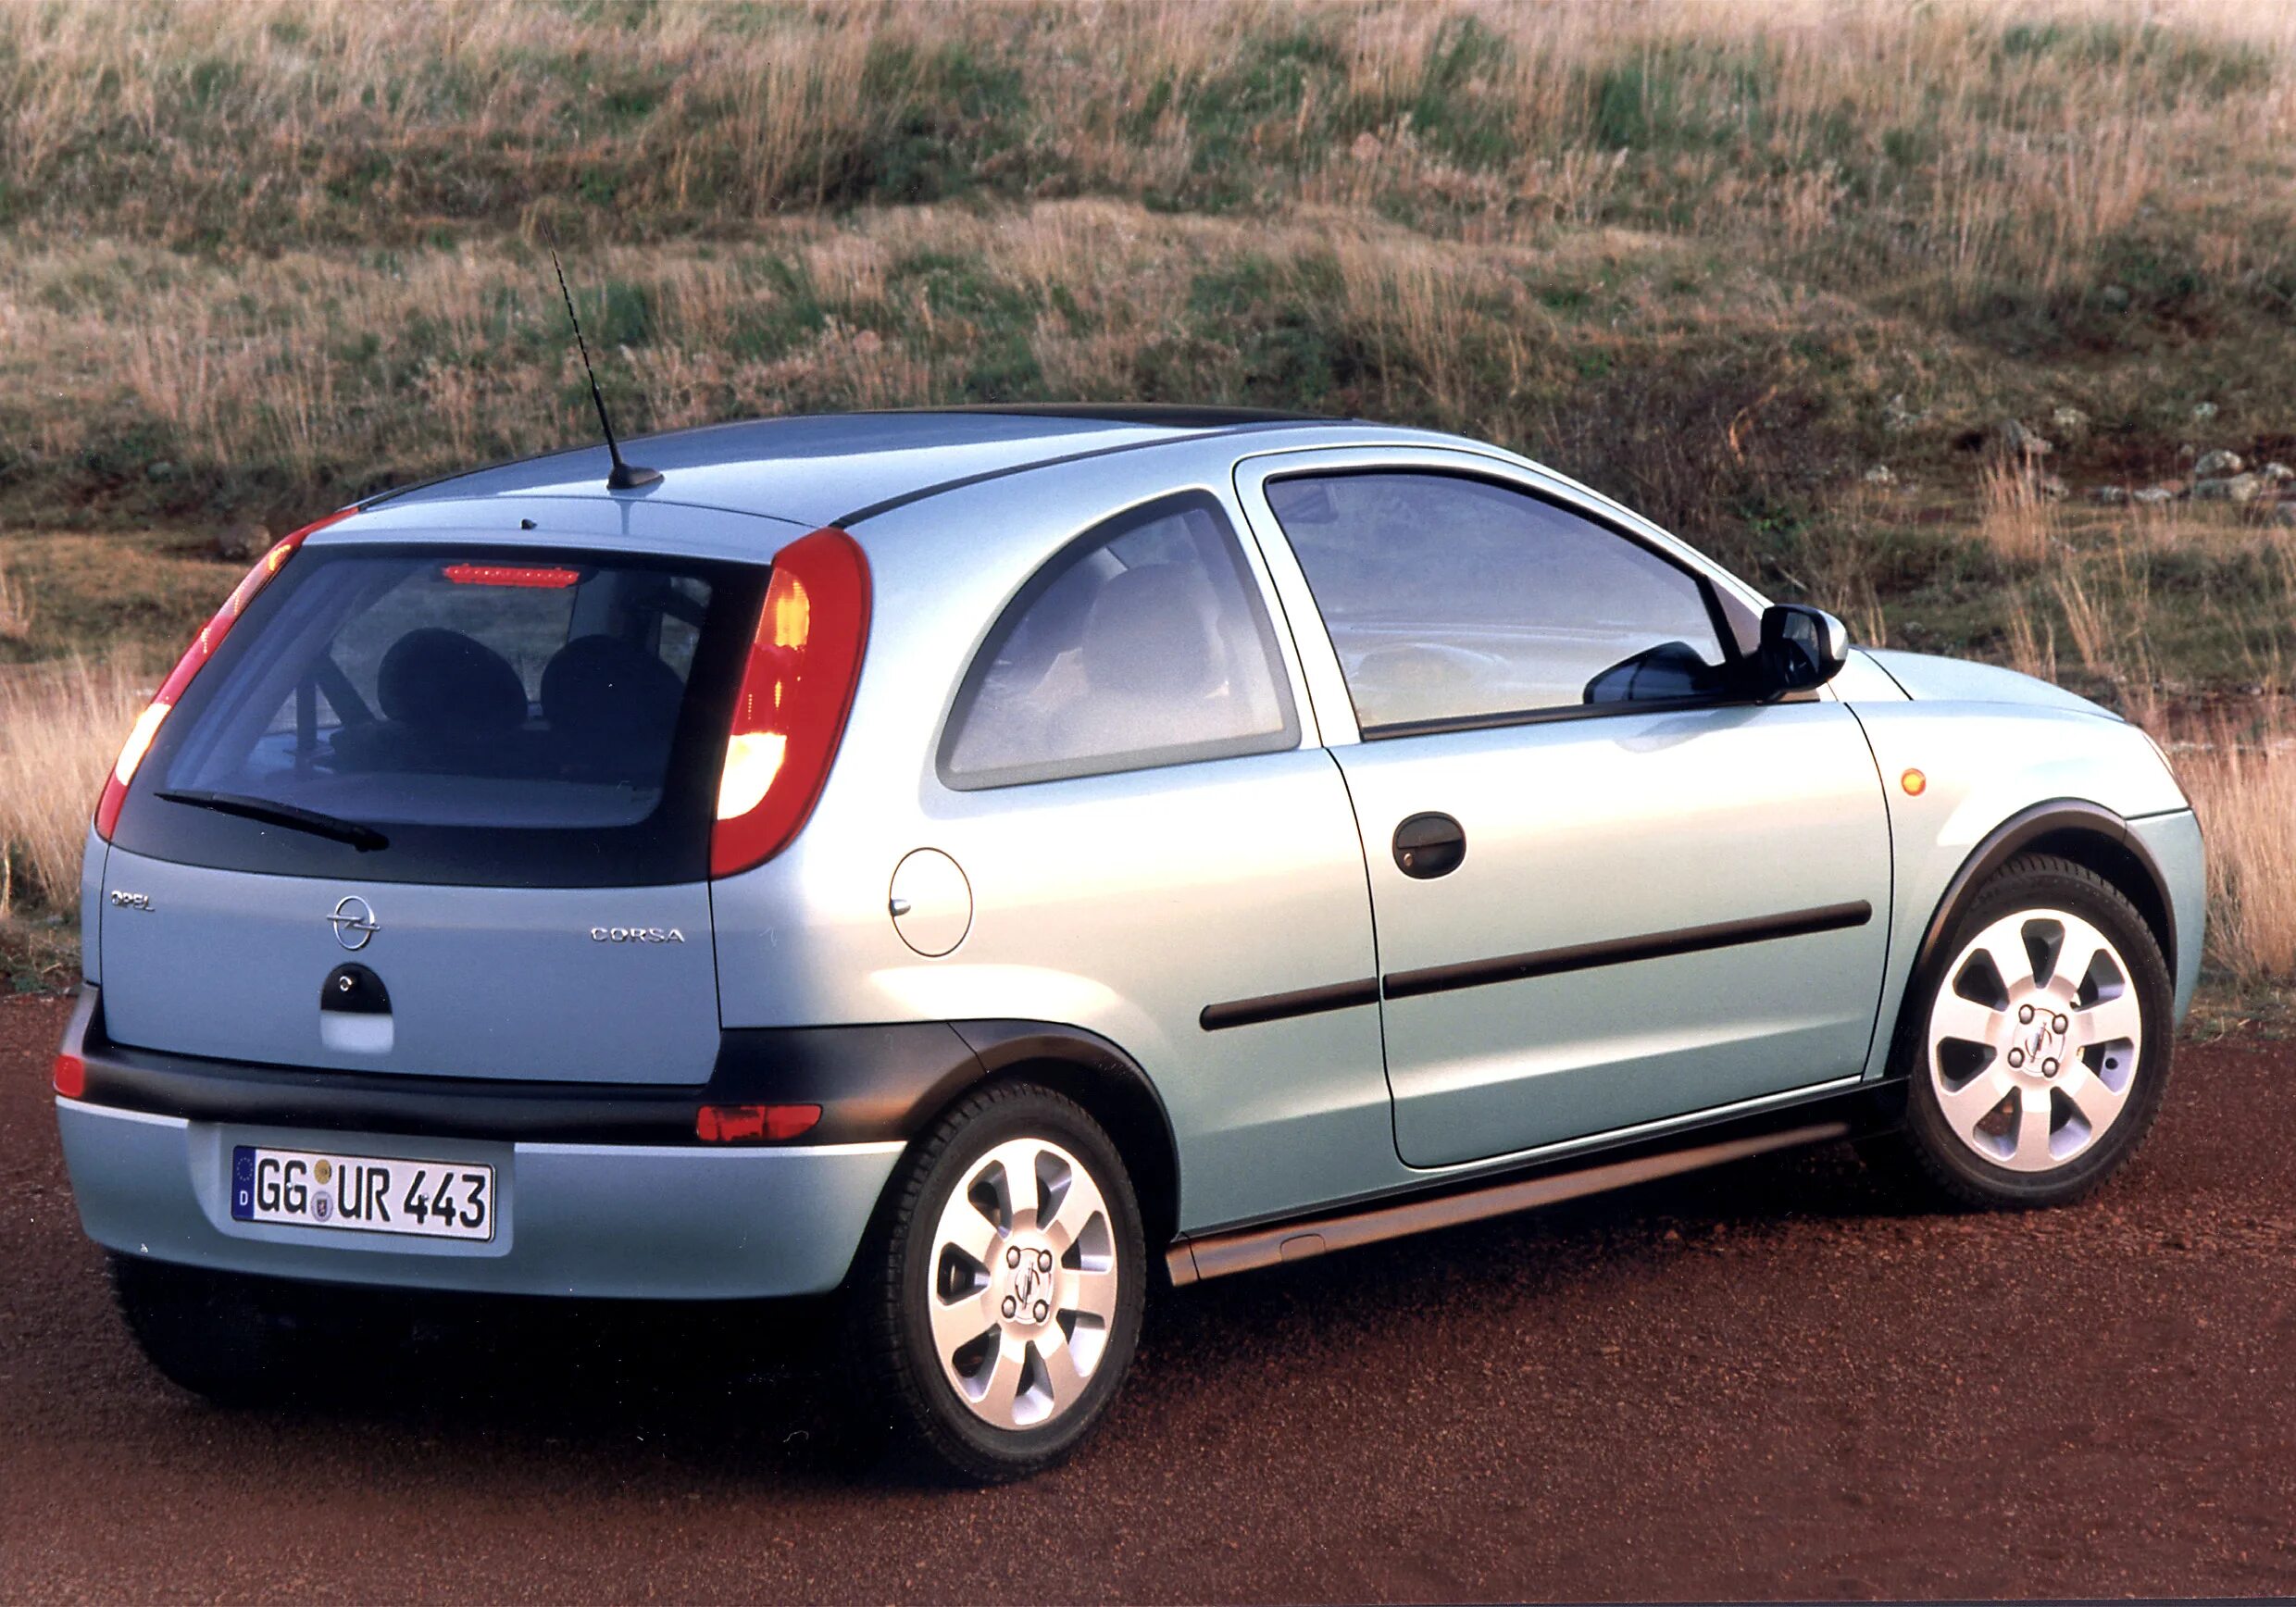 Opel Corsa c 2003. Opel Corsa 2000. Opel Corsa 1.2 2003. Opel Corsa c 1.4. Opel corsa 2003